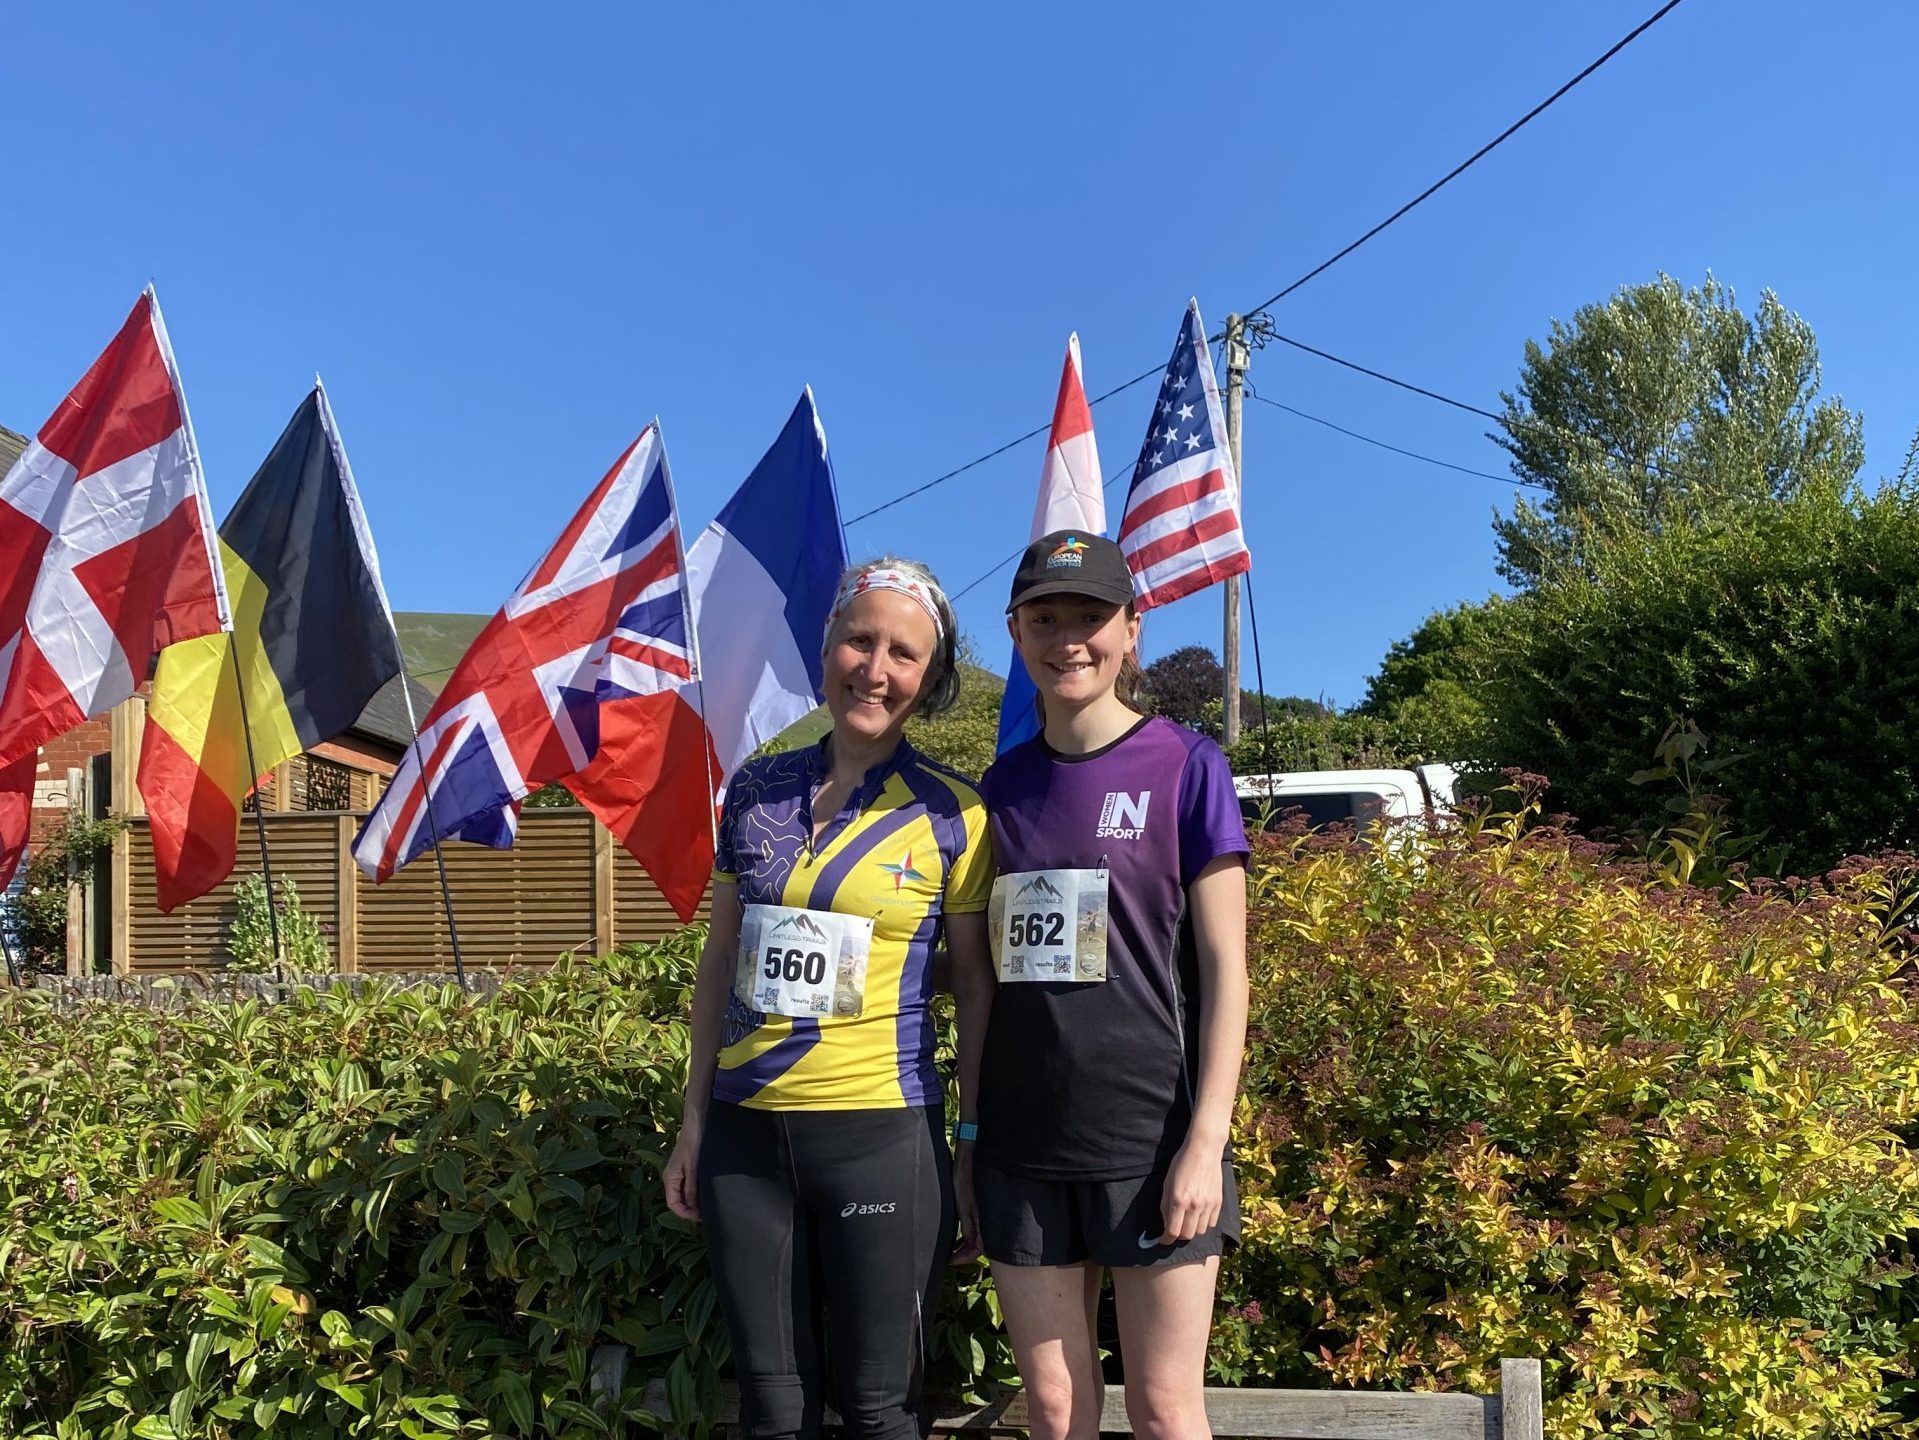 Sarah and her mum running a half marathon together